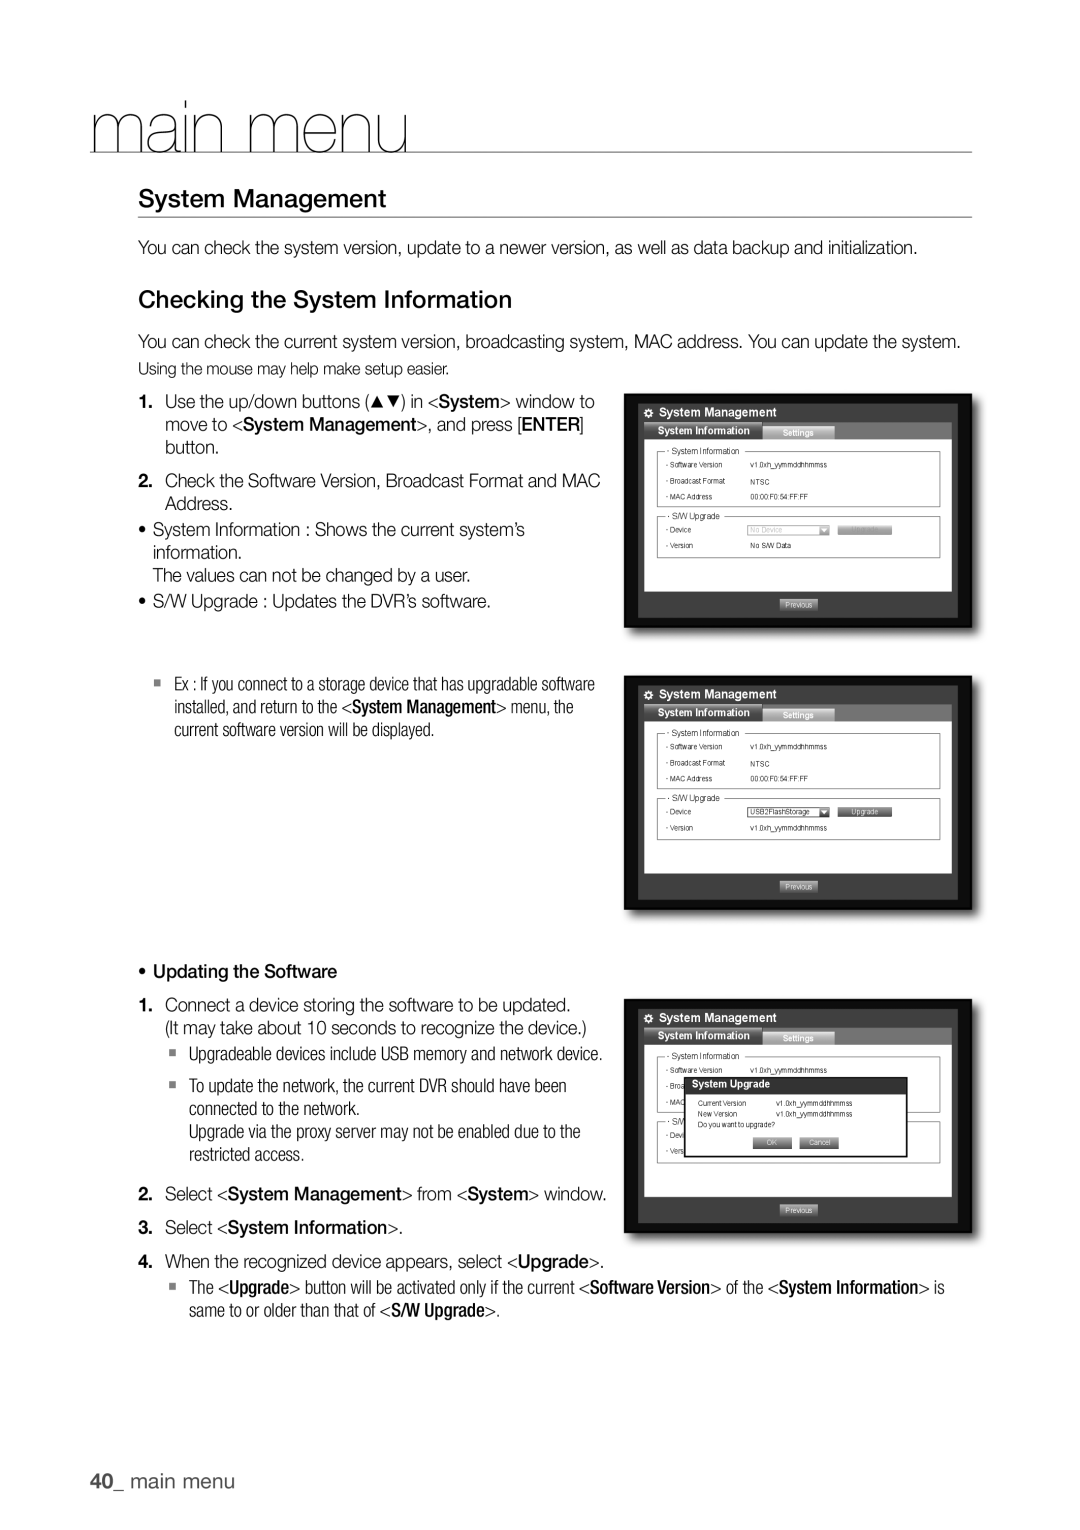 Samsung SDR3100 user manual System management, Checking the System information, main menu 